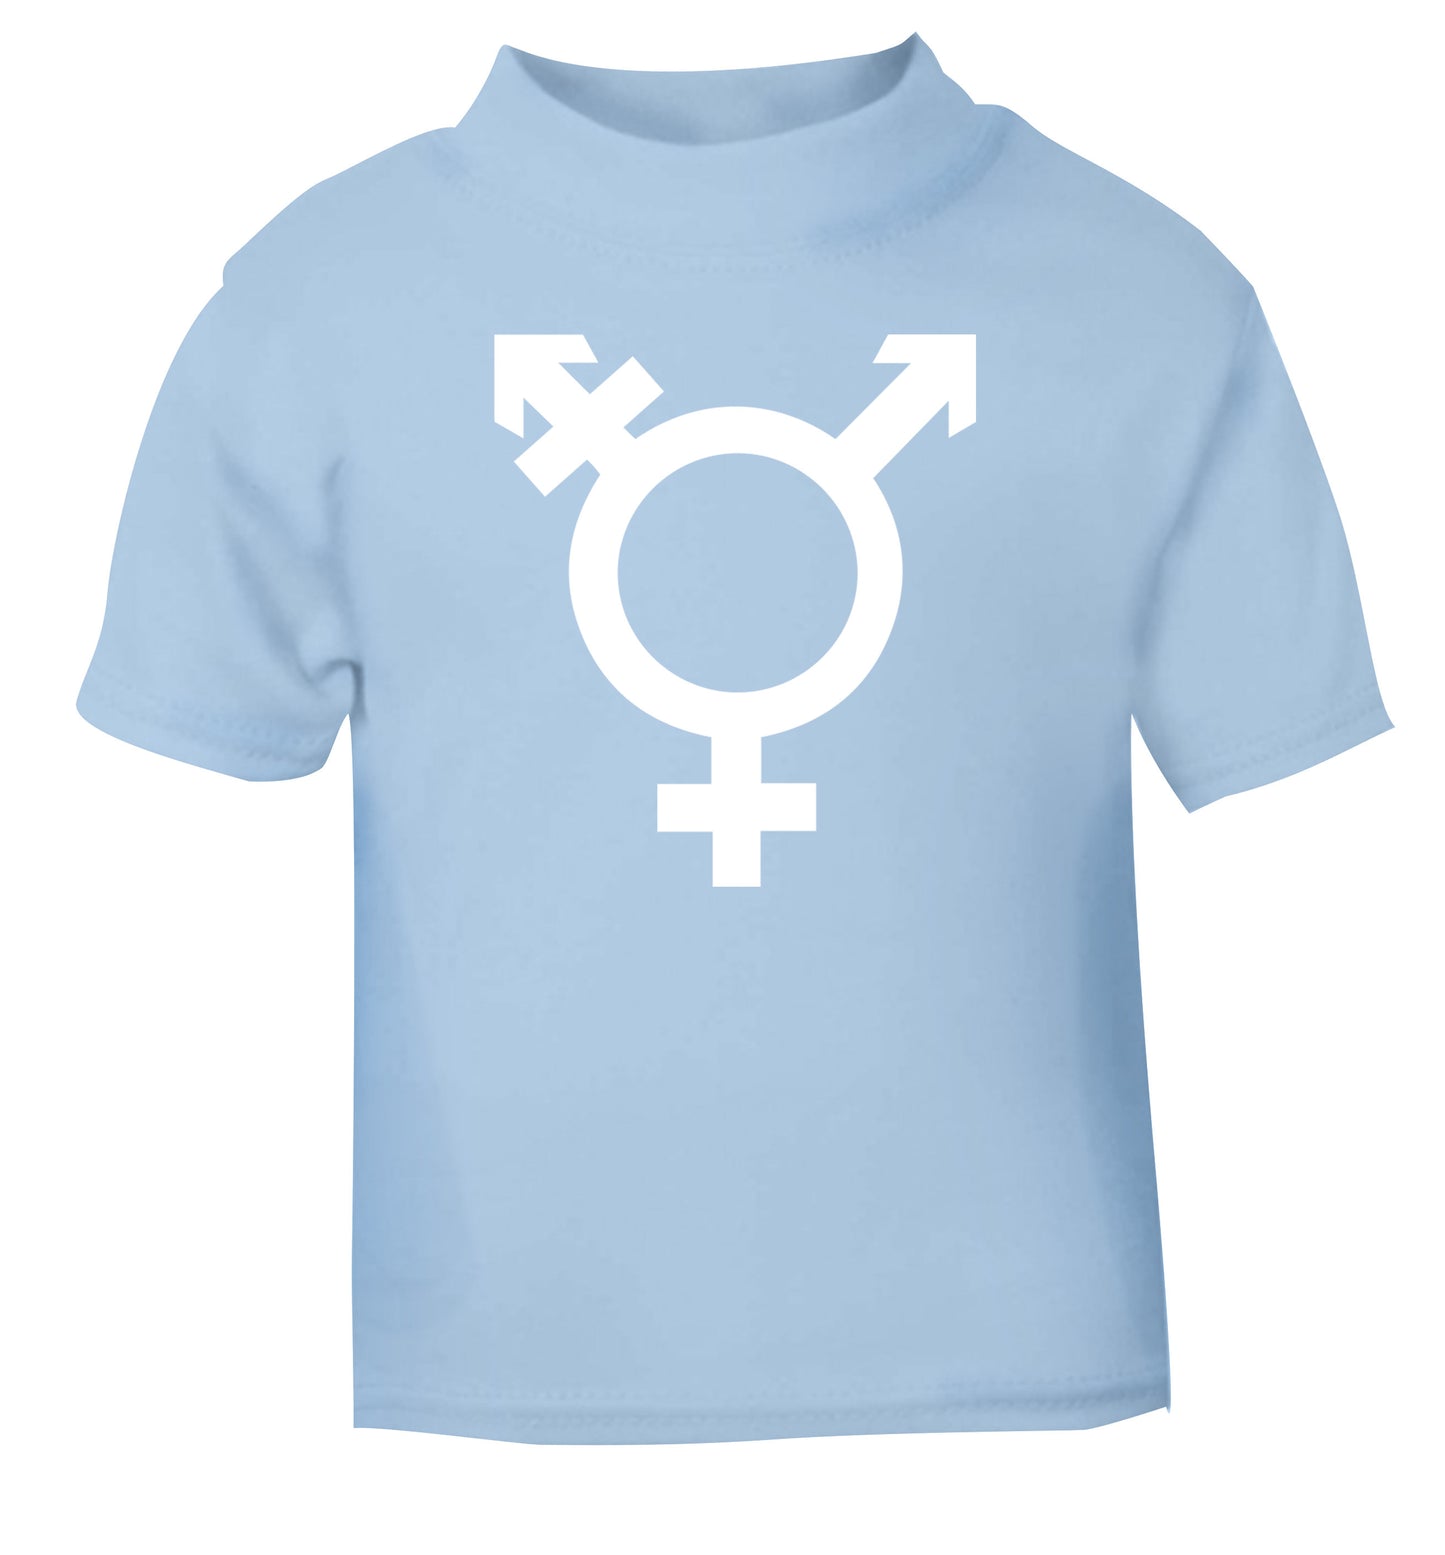 Gender neutral symbol large light blue Baby Toddler Tshirt 2 Years